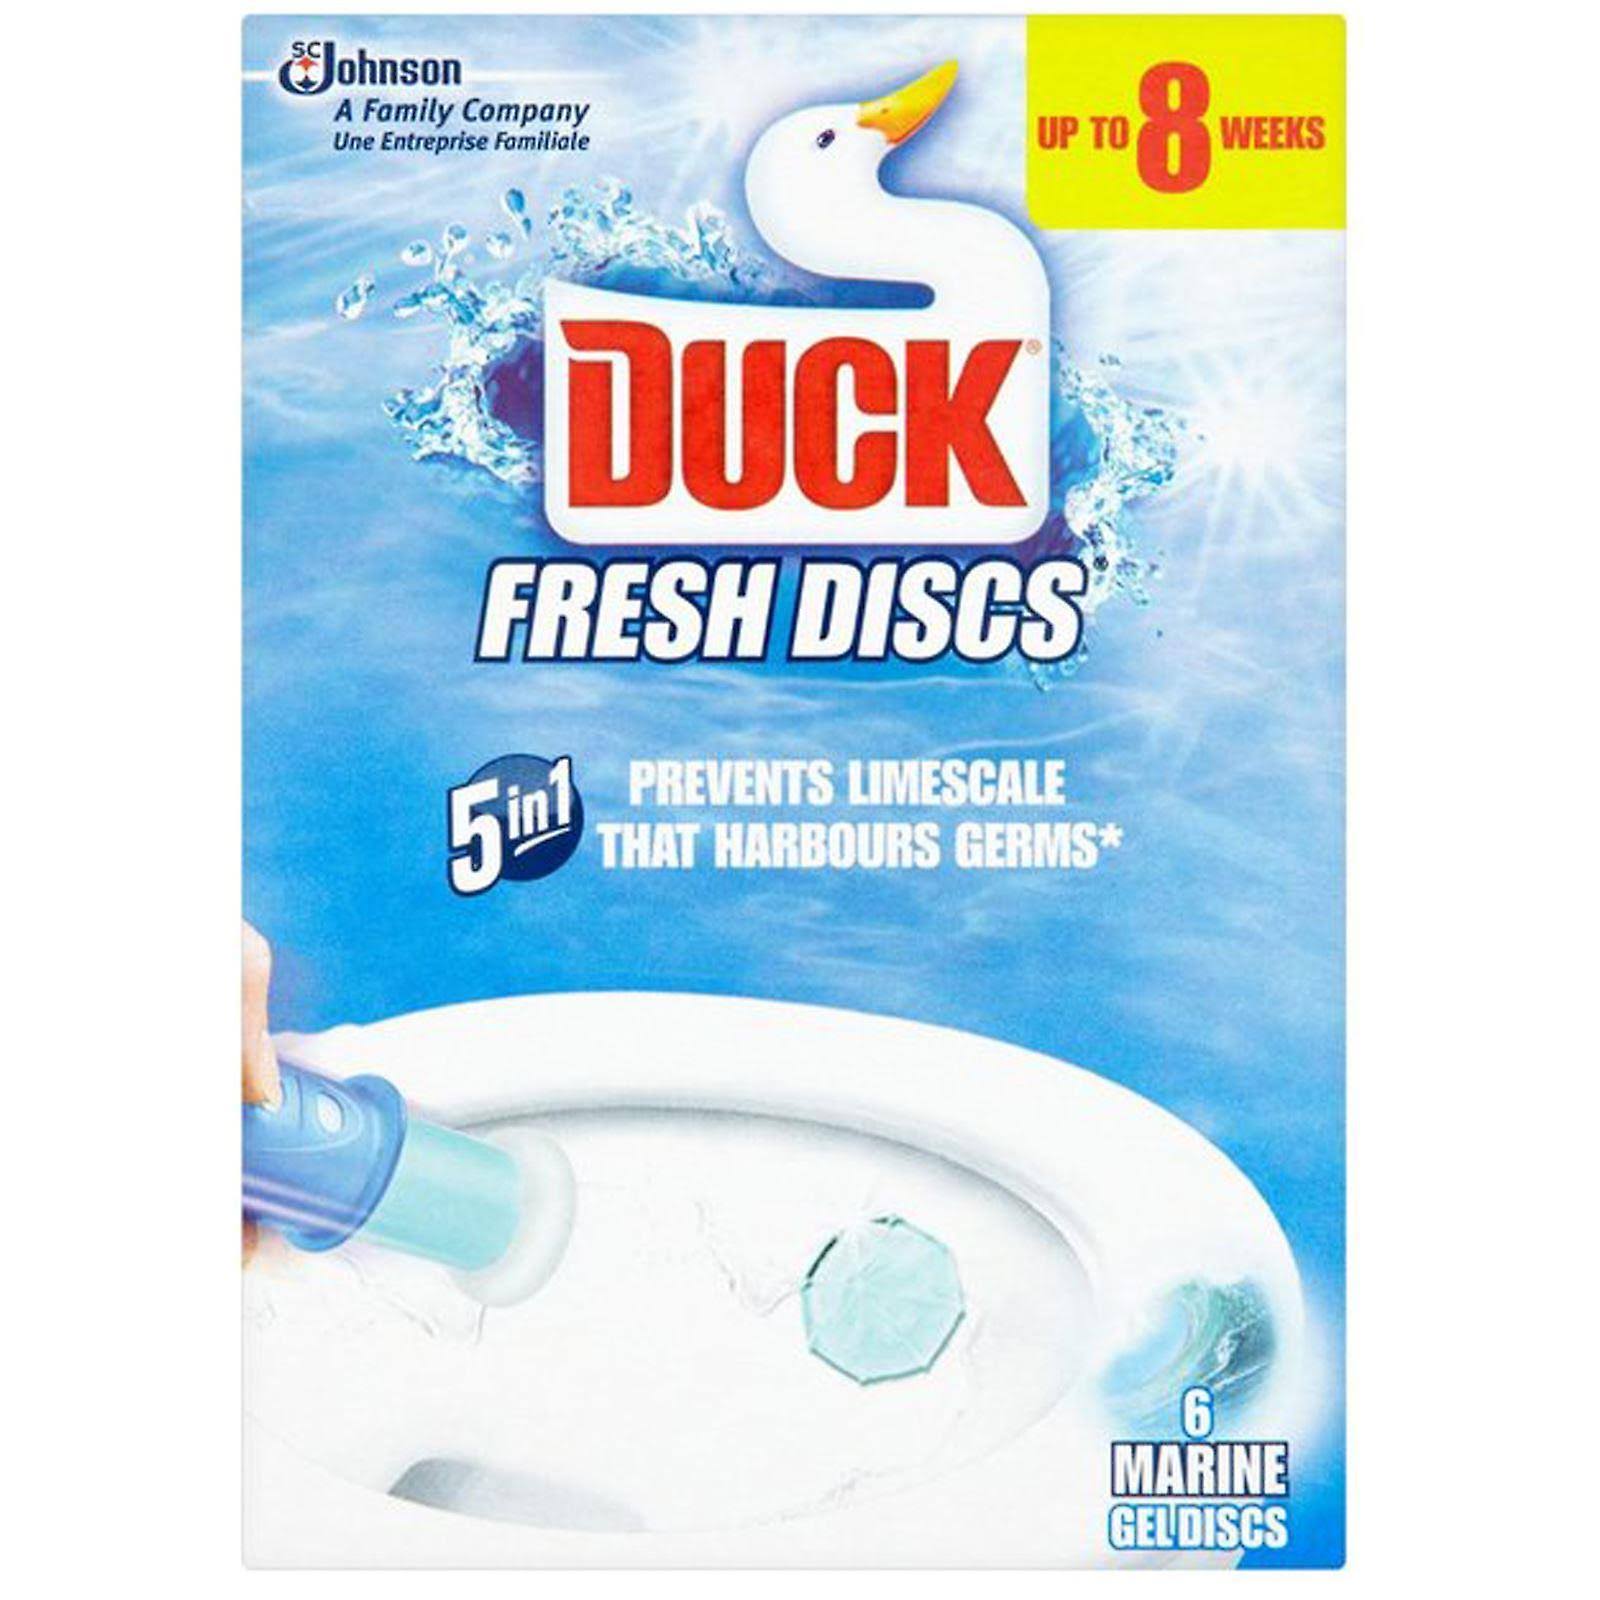 Duck 5in1 Fresh Discs Marine Gel Discs - 6 Marine Gel Discs, 36ml